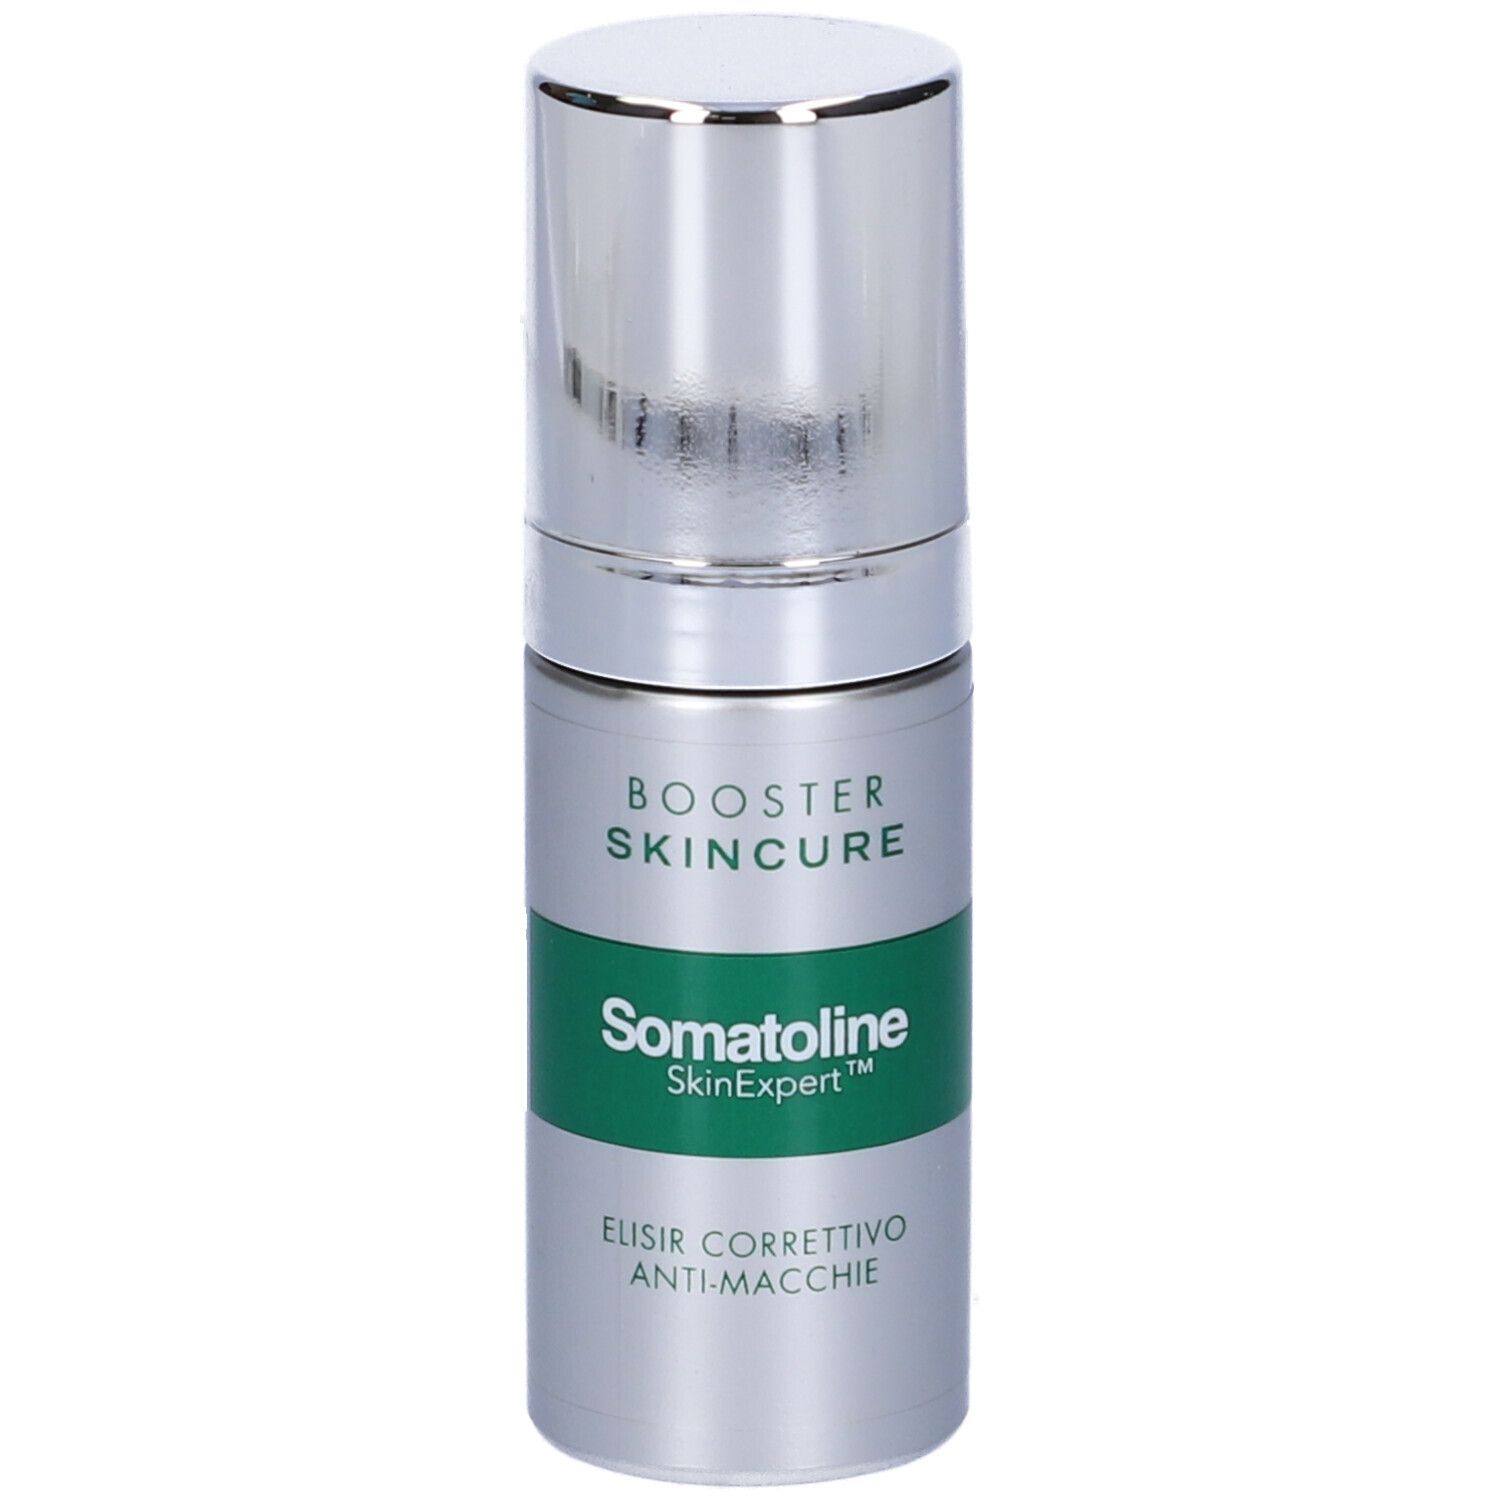 Somatoline Skin Expert Booster Skincure Elisir Anti-Macchie Viso